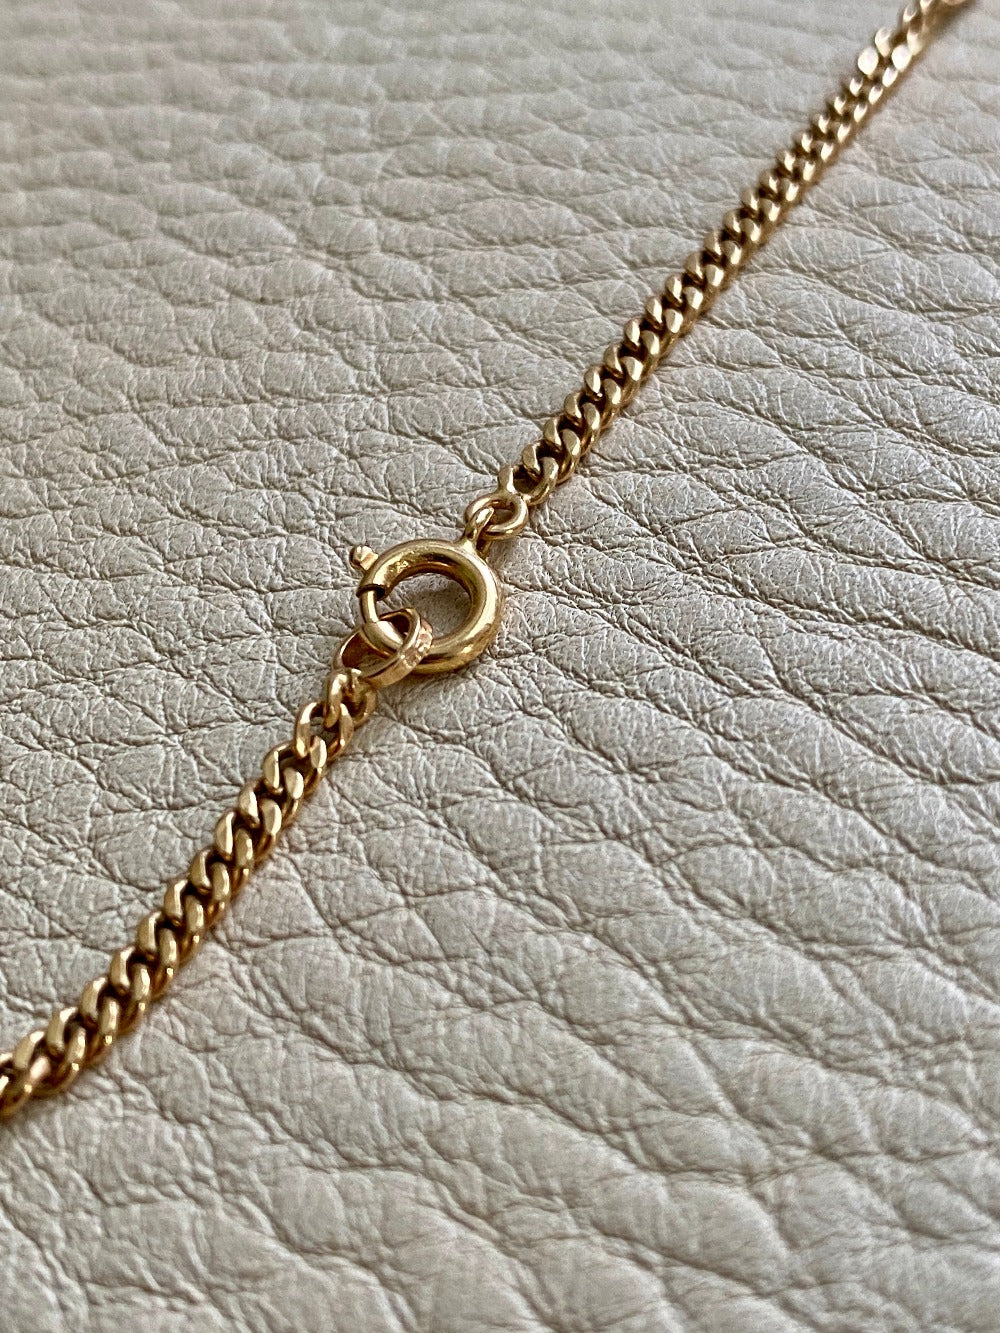 18k gold graduated curb link necklace, vintage from Sweden 1950s